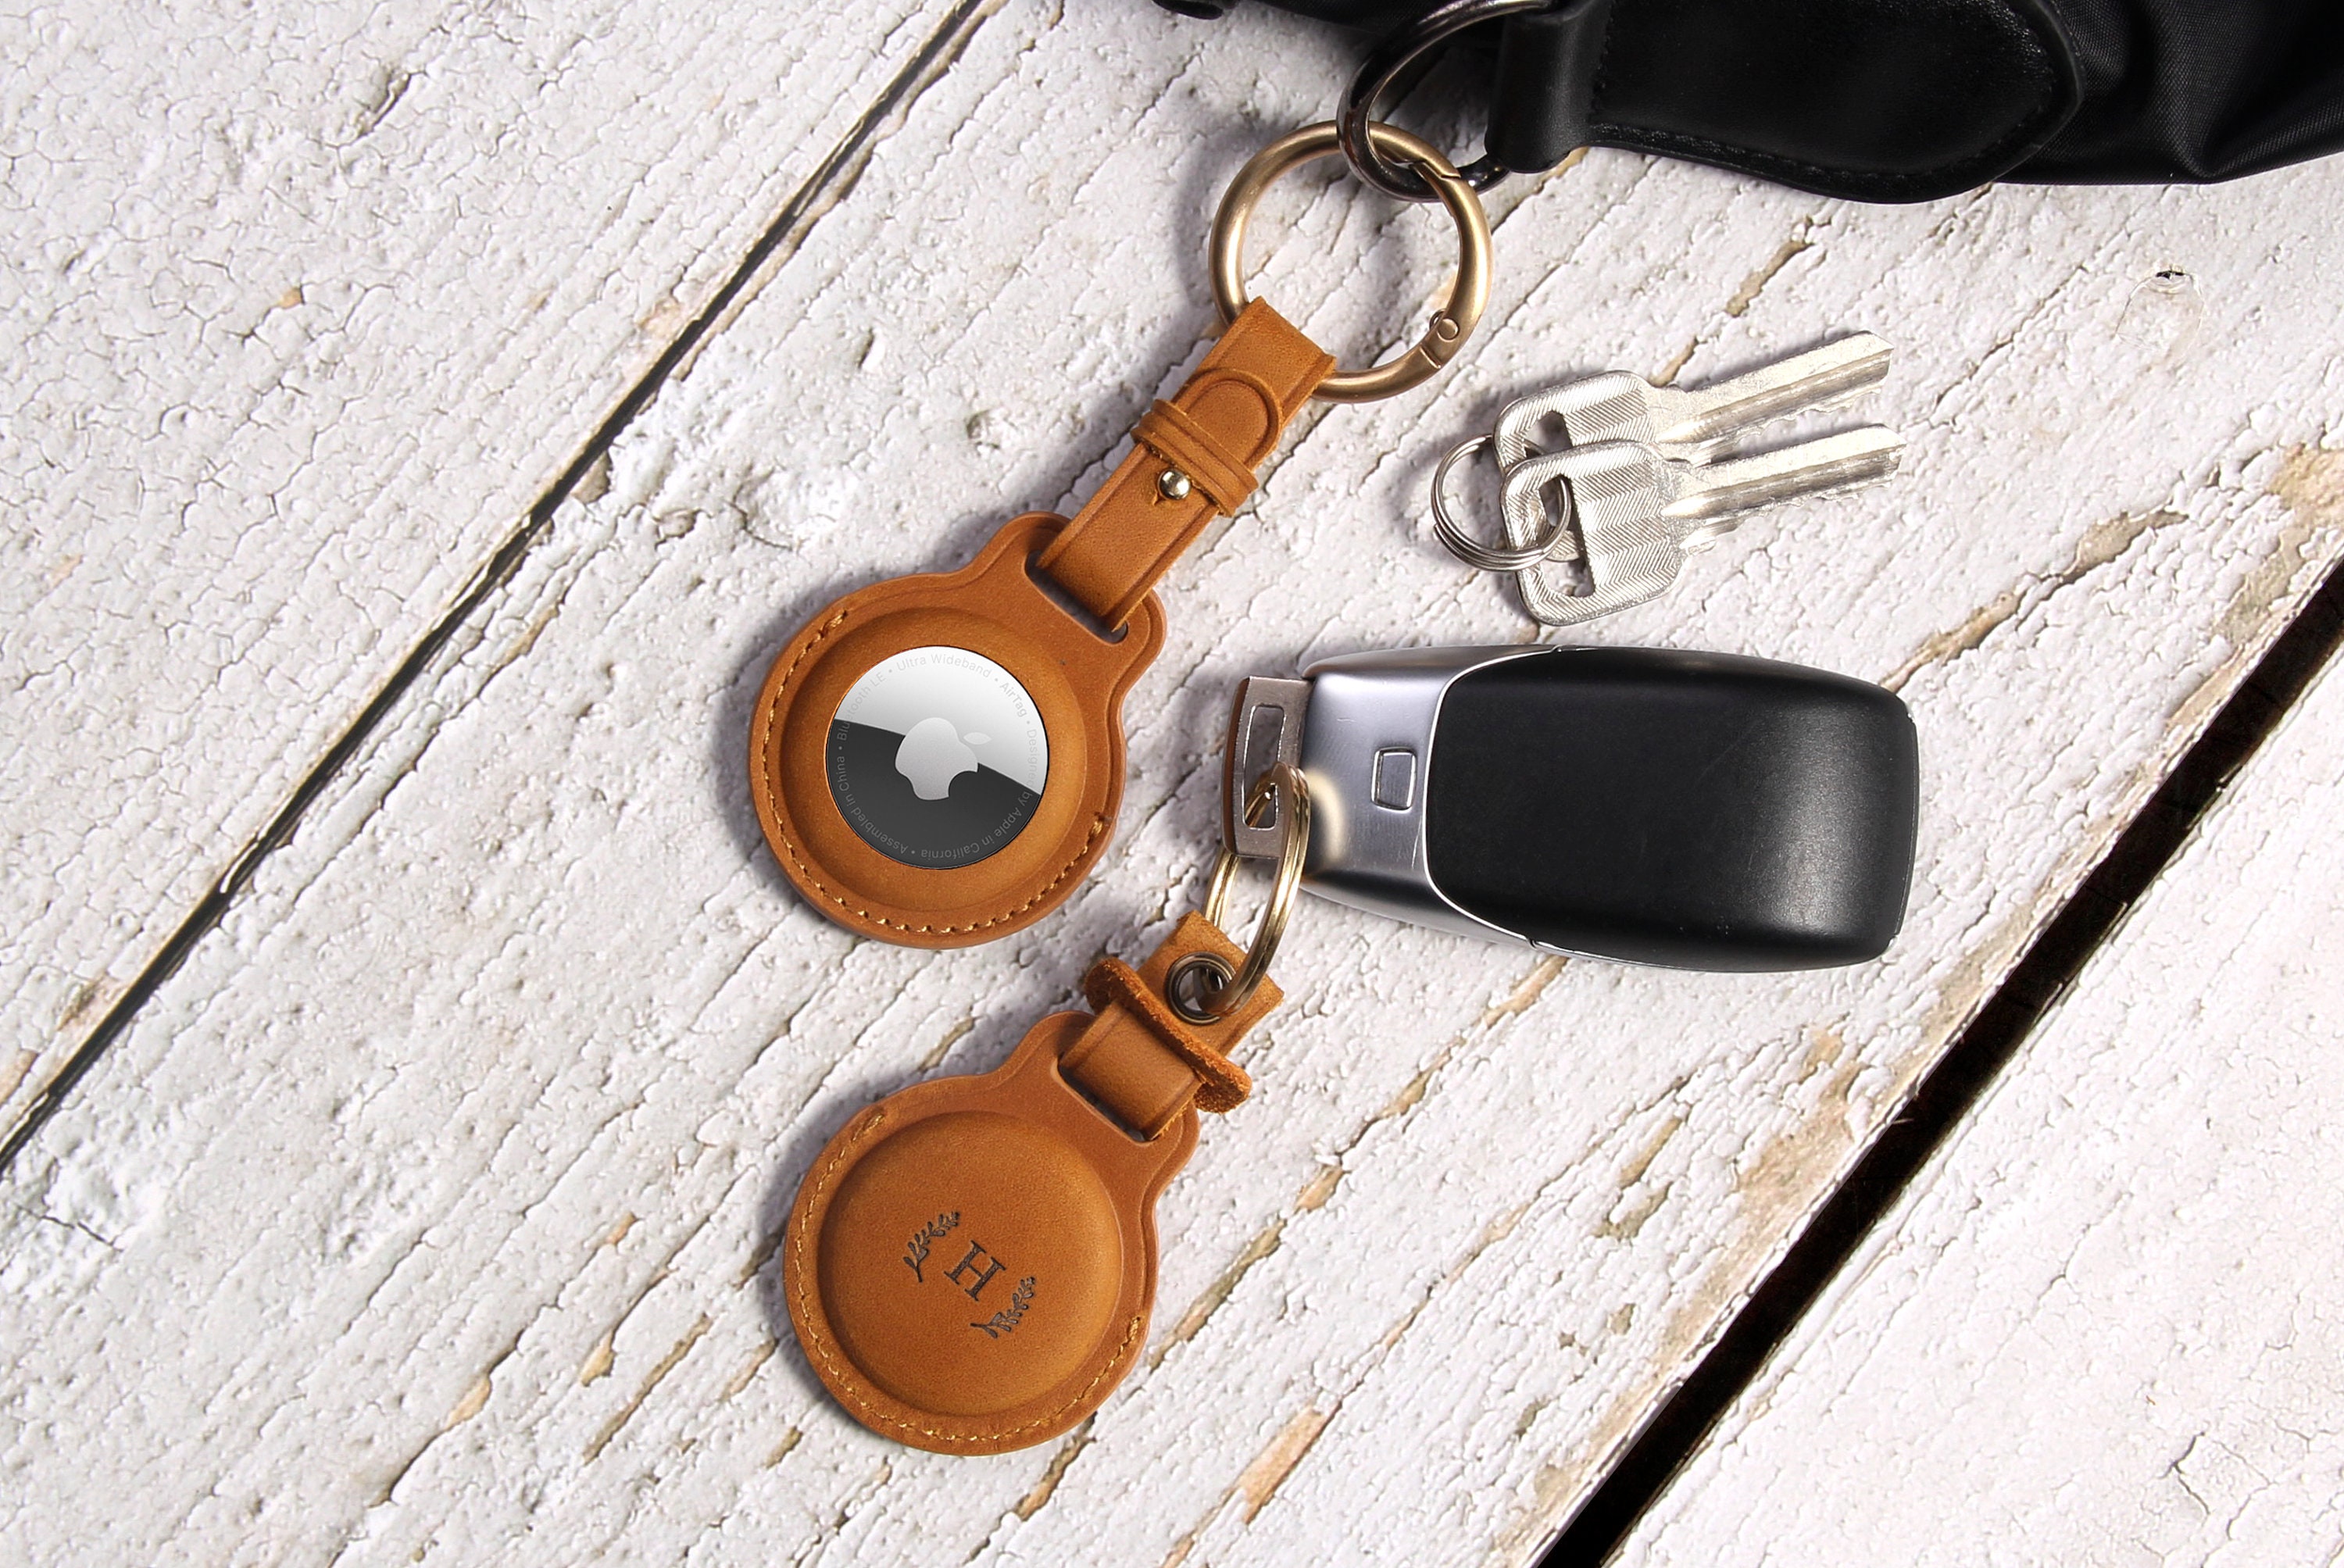 LanMa Key Chain Stainless Heavy Duty Car Keychain Elegance Key Holder for Men